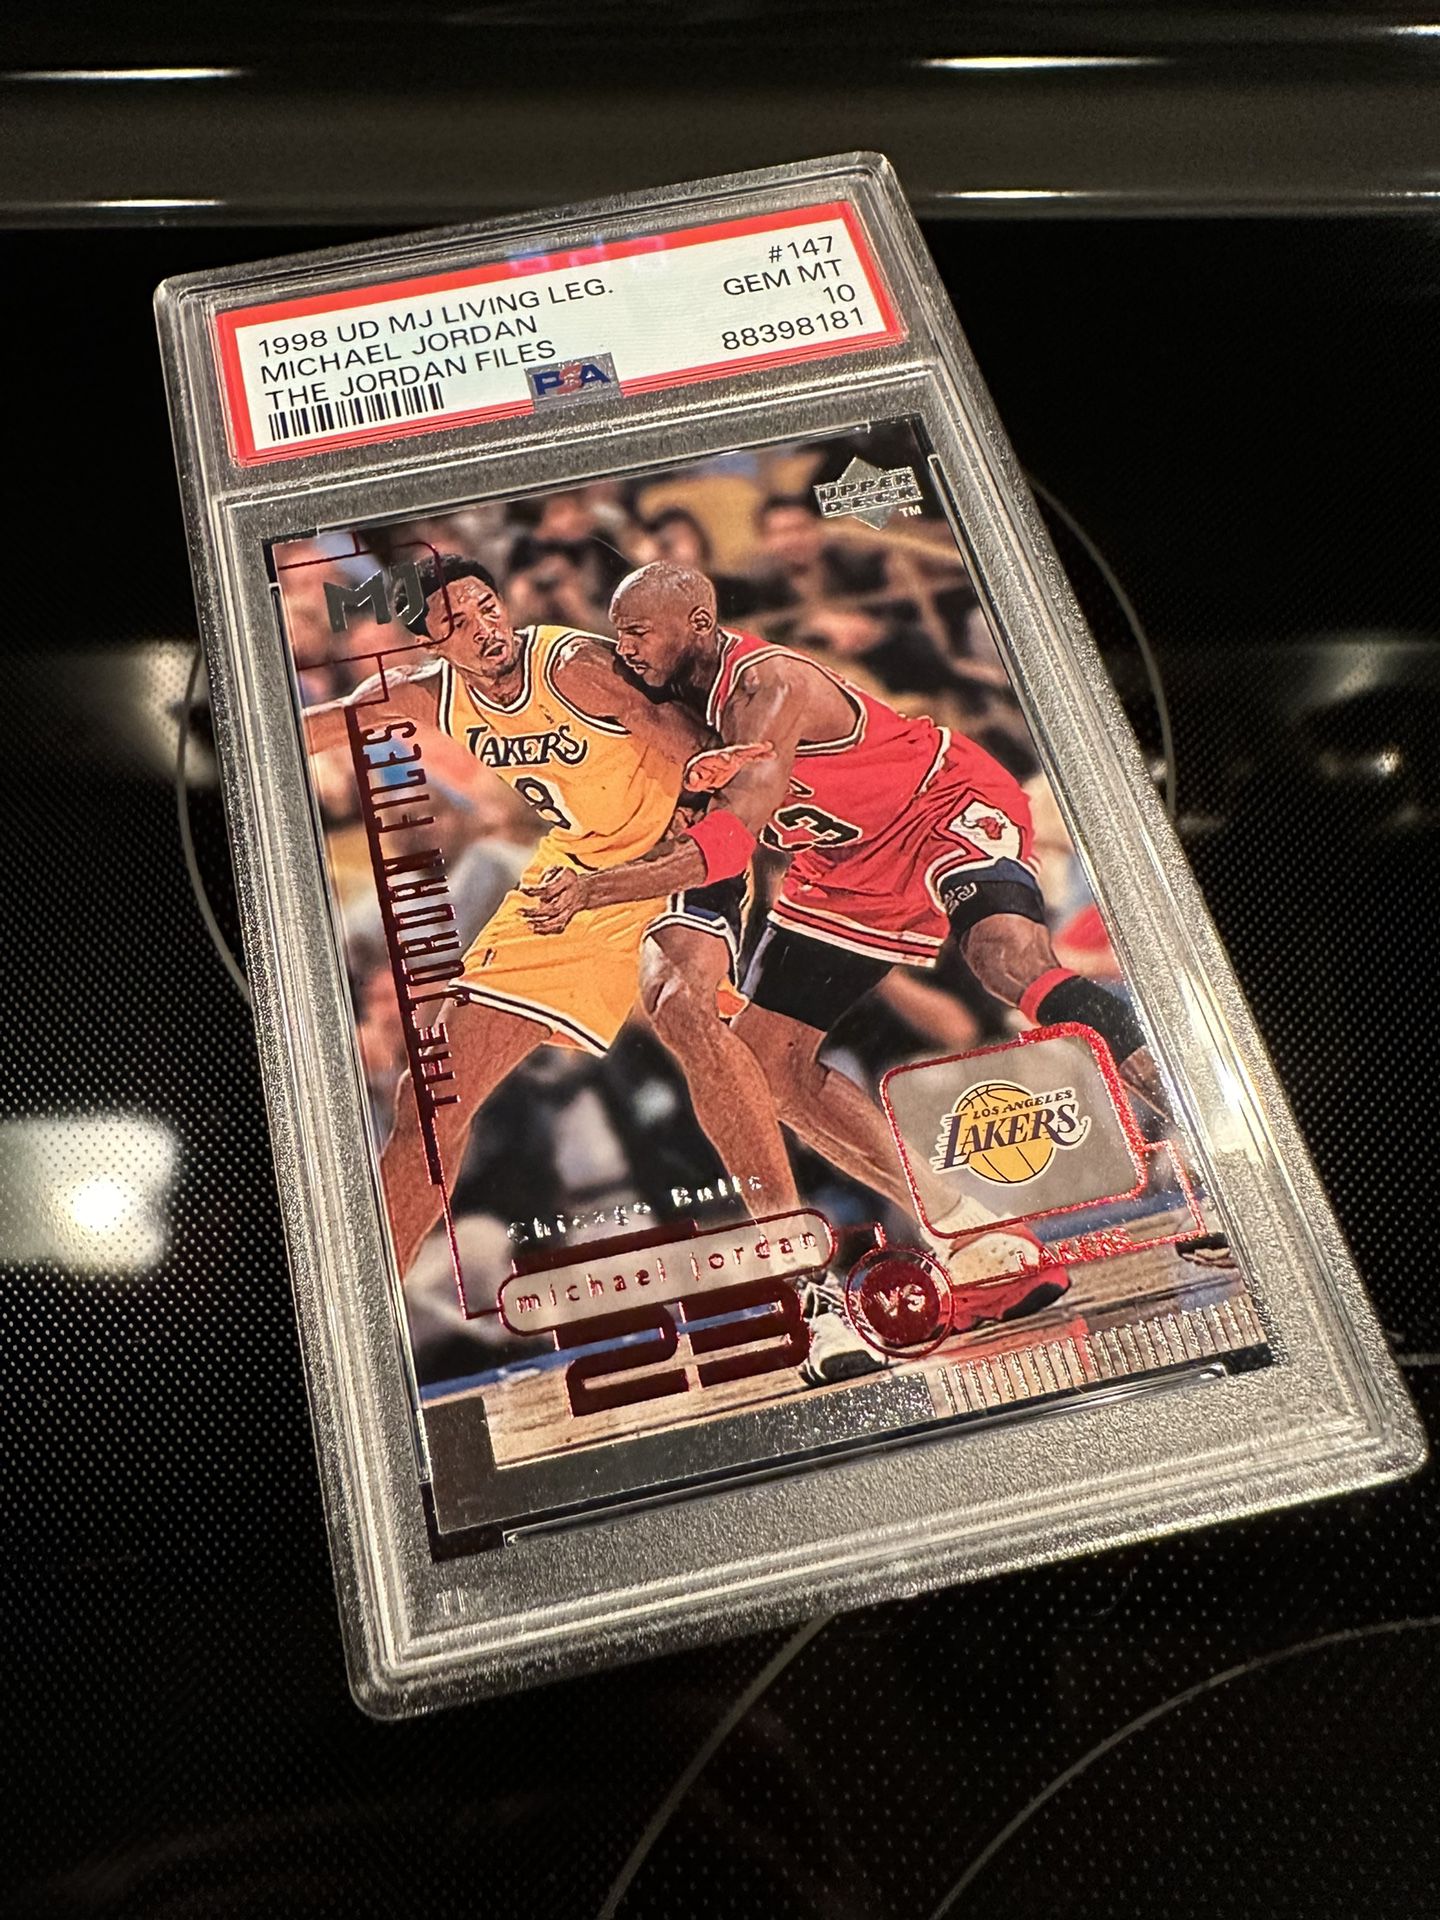 Upper Deck Michael Jordan vs Kobe Bryant - The Jordan Files Living Legend - RARE ICONIC CARD - Bulls Jersey 23 Collectibles - PSA 10 GEM MINT 💎